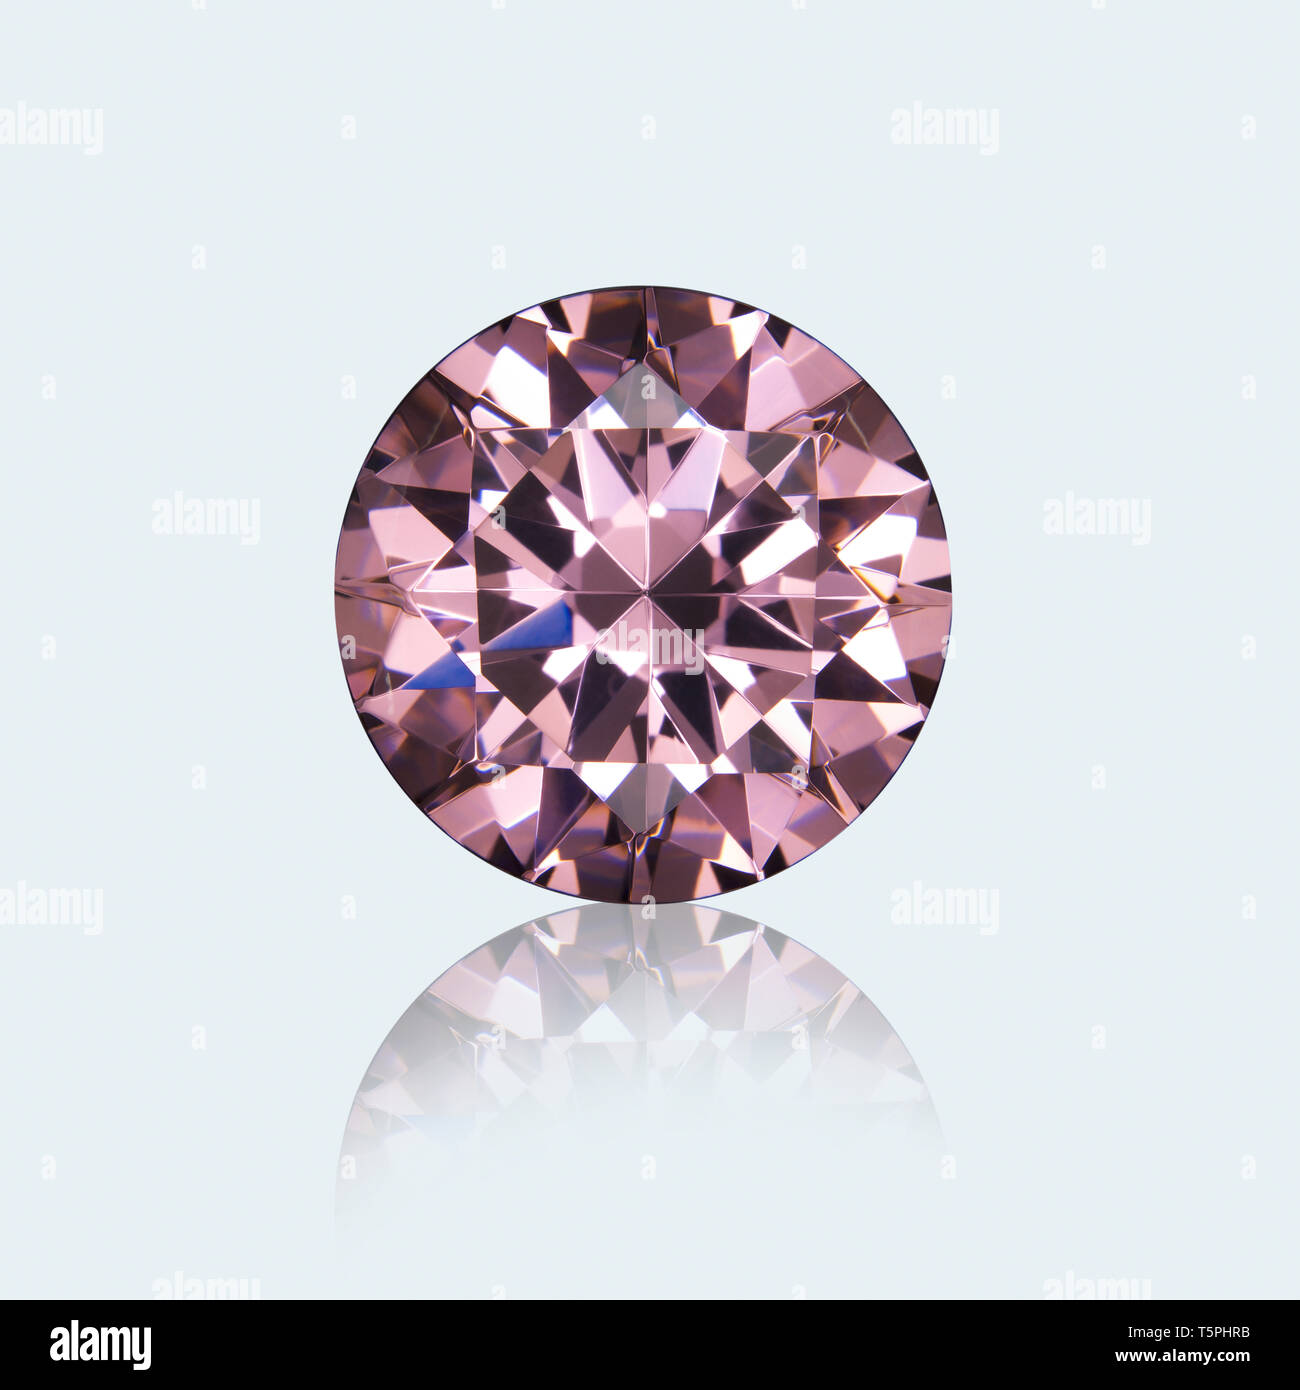 Round cut Gemstone, Fancy Diamond, Pink Sapphire, Fancy Diamond Gemstone, Pink Sapphire Gemstone, Round Cut Fancy Diamond, Round cut Pink Sapphire Stock Photo